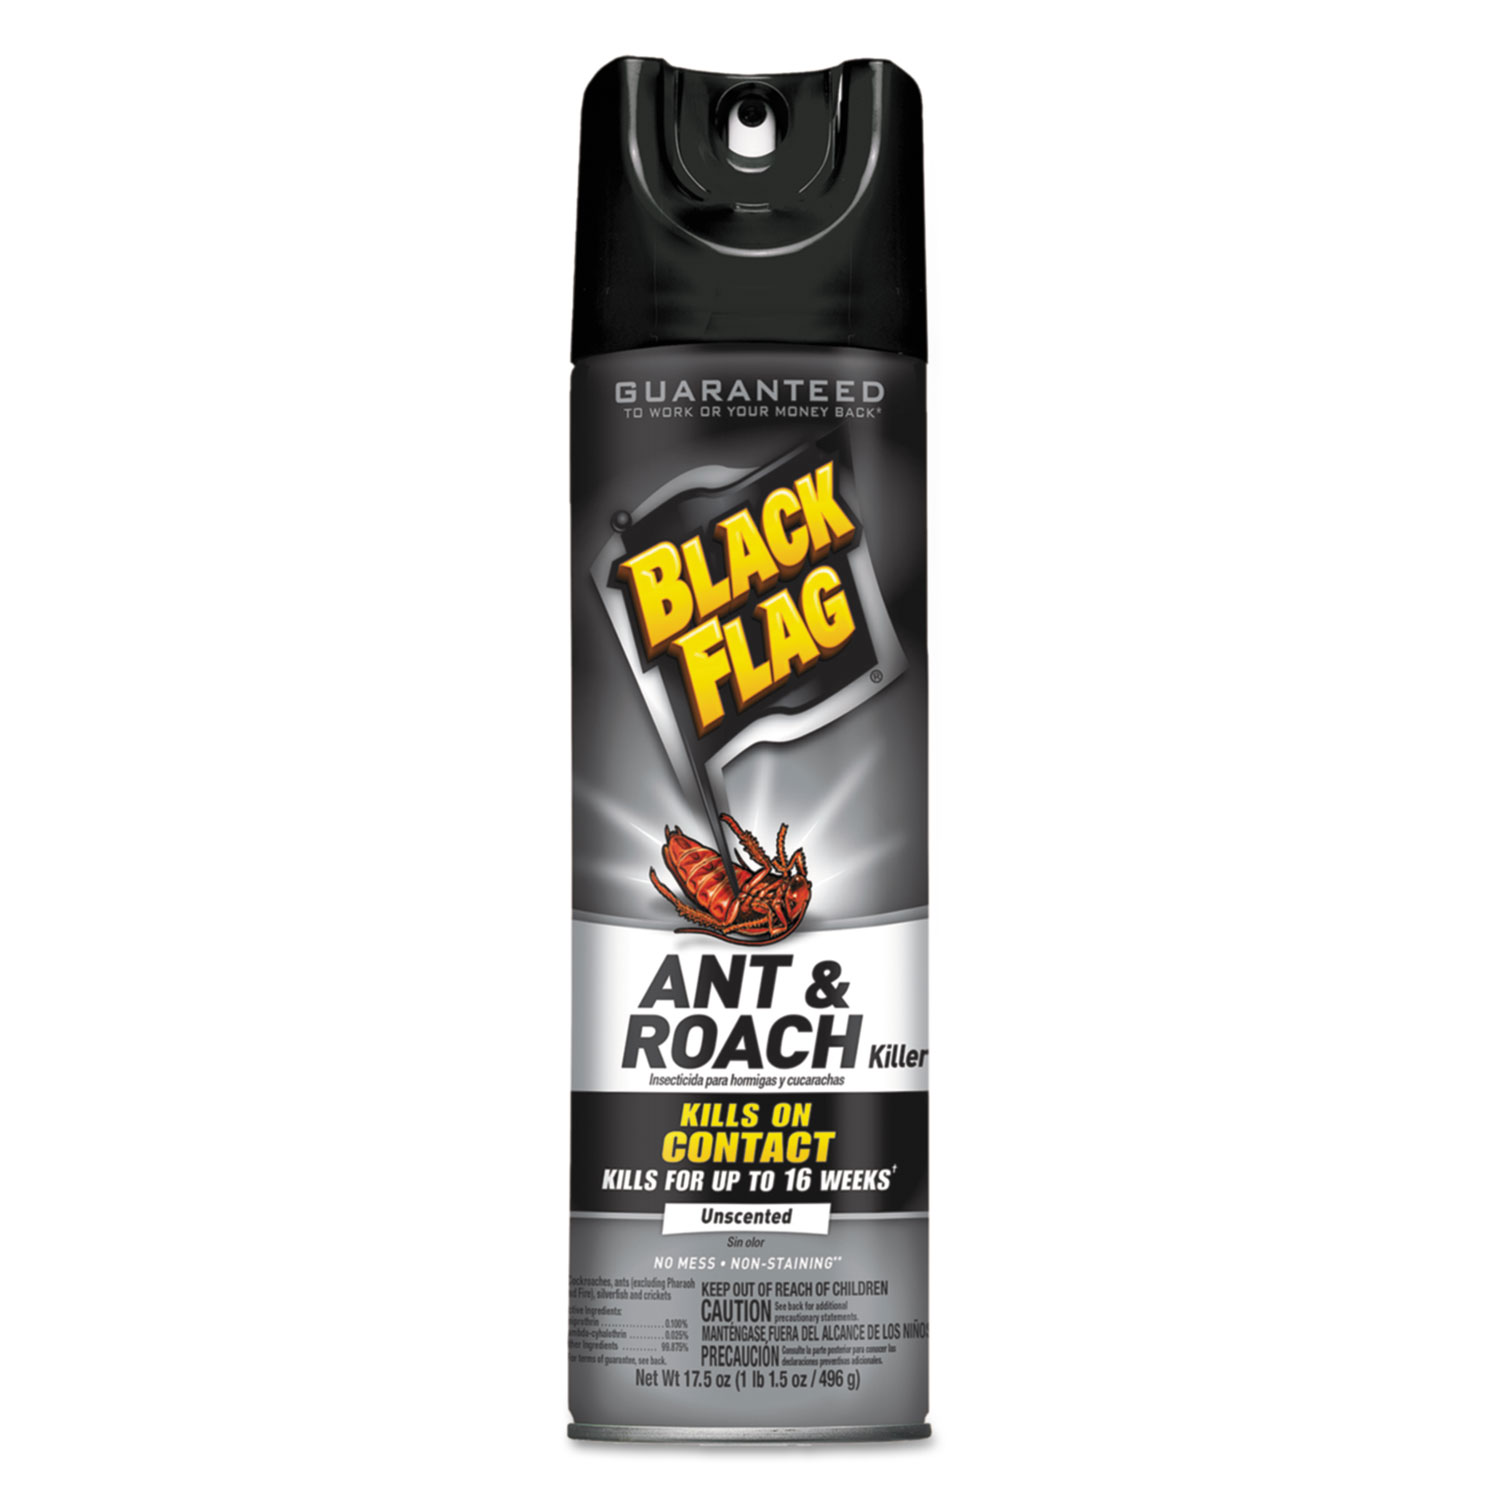  Diversey CB110315 Black Flag Ant & Roach Killer Spray, 17.5 oz Aerosol, 12/CT (DVOCB110315) 